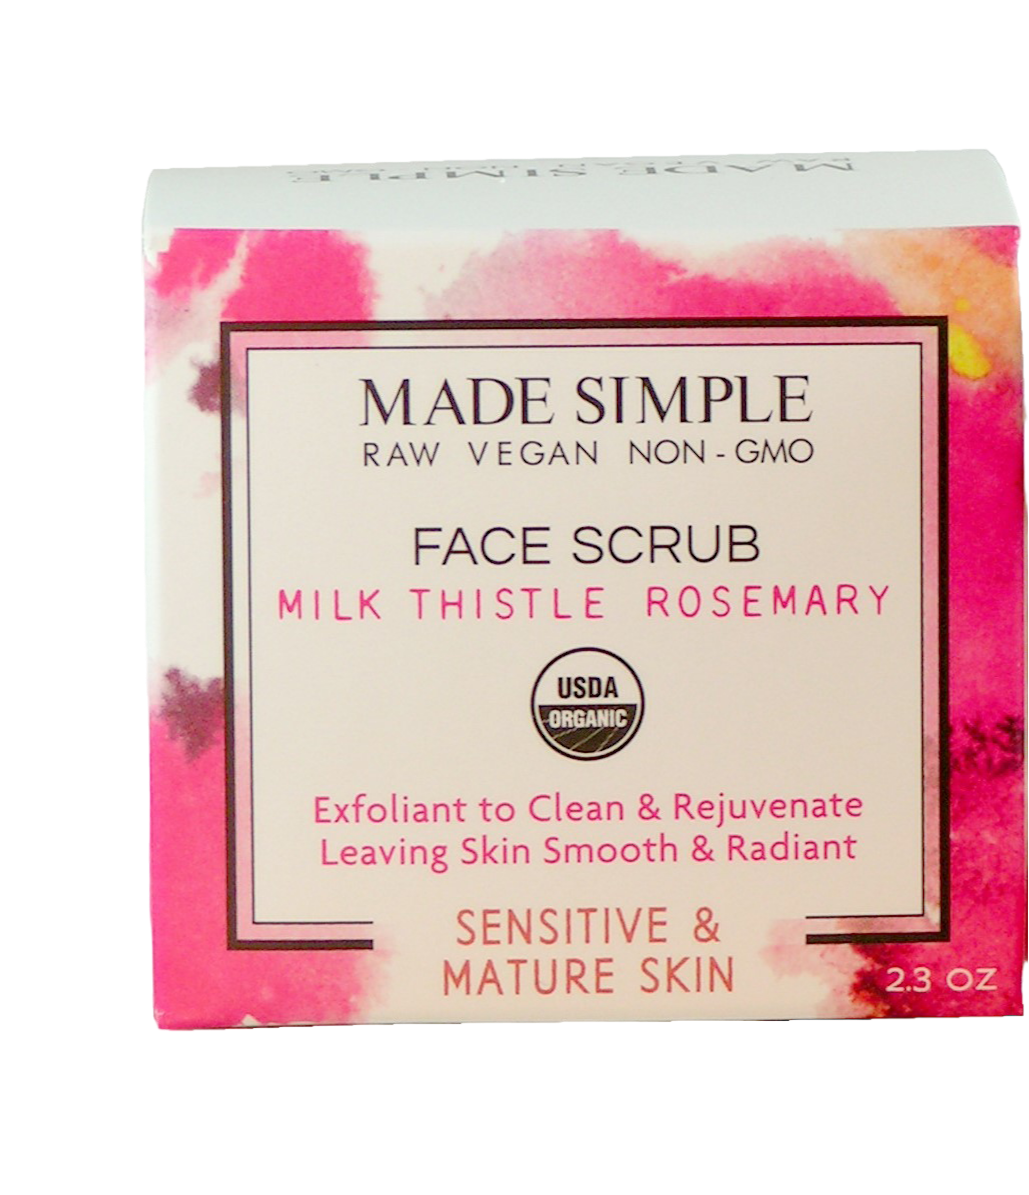 Made Simple Skin Care Milk Thistle Rosemary Face Scrub USDA Certified Organic Raw Vegan NonGMO